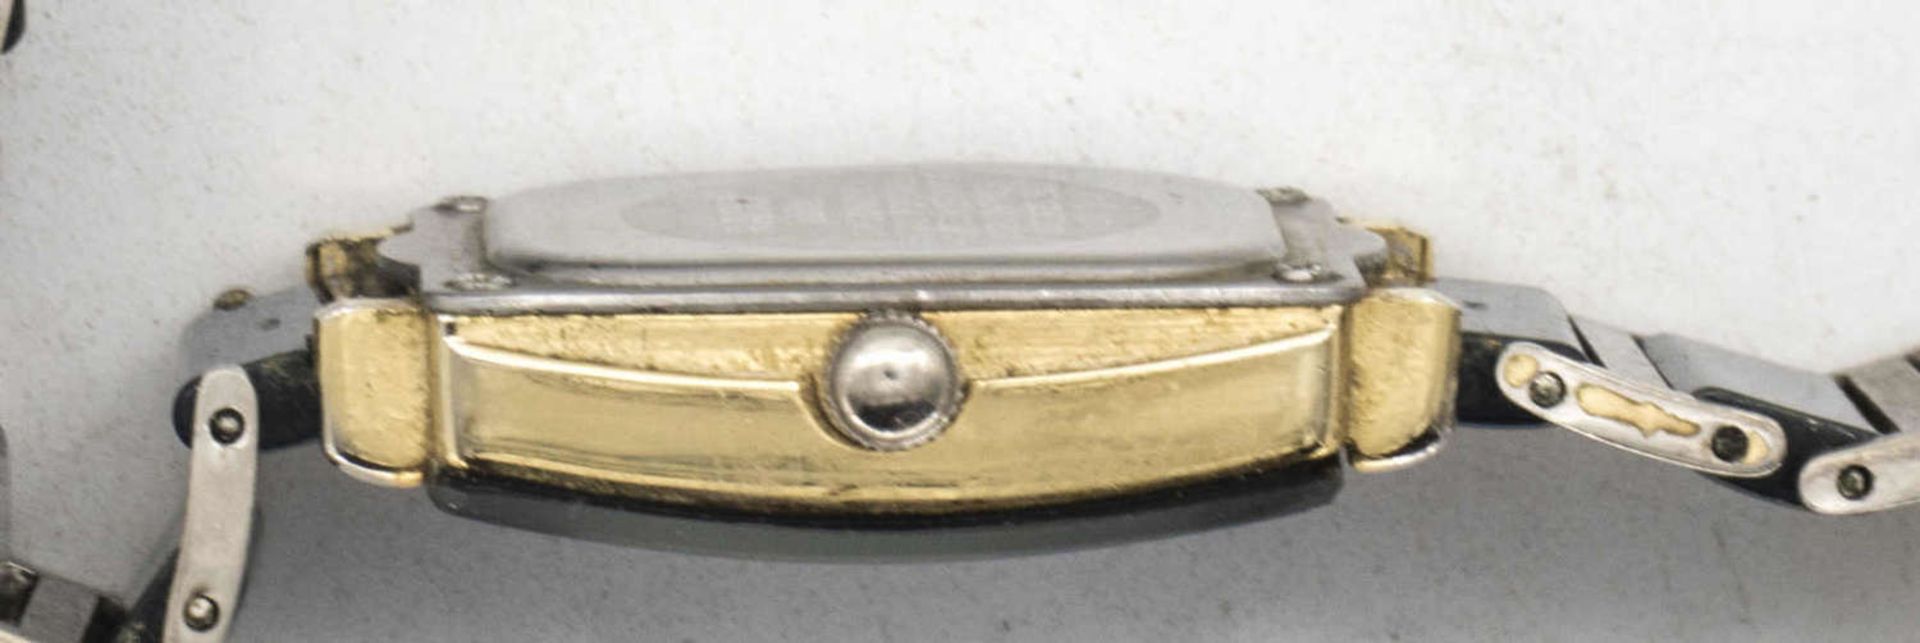 Rado Jubilé Diastar Keramik Damen - Armbanduhr. Quartz. Boden nicht original. Funktion nicht - Bild 3 aus 4